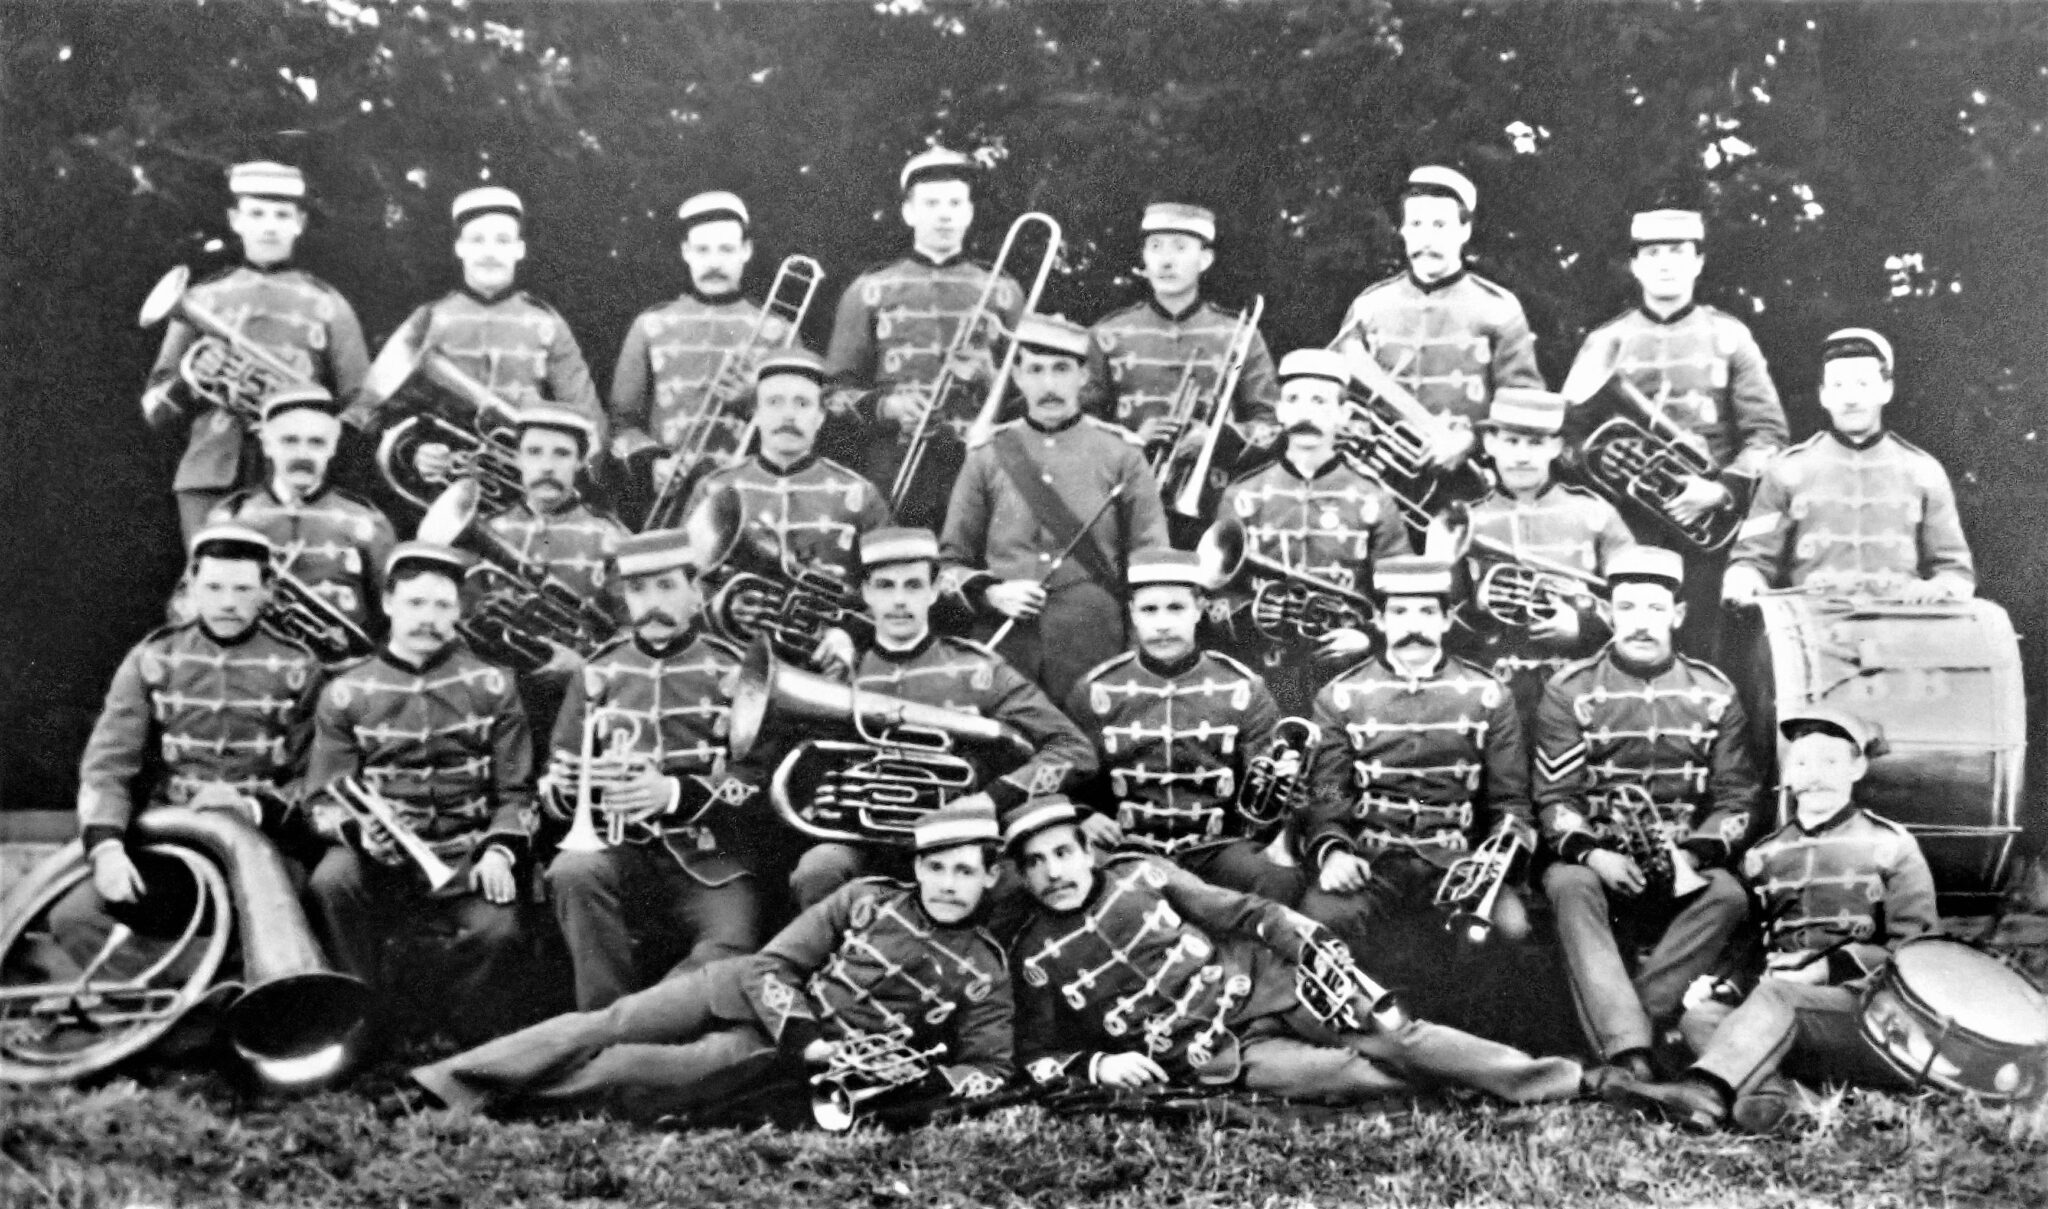 Mosgiel Brass is celebrating 150 years – Mosgiel Brass Band